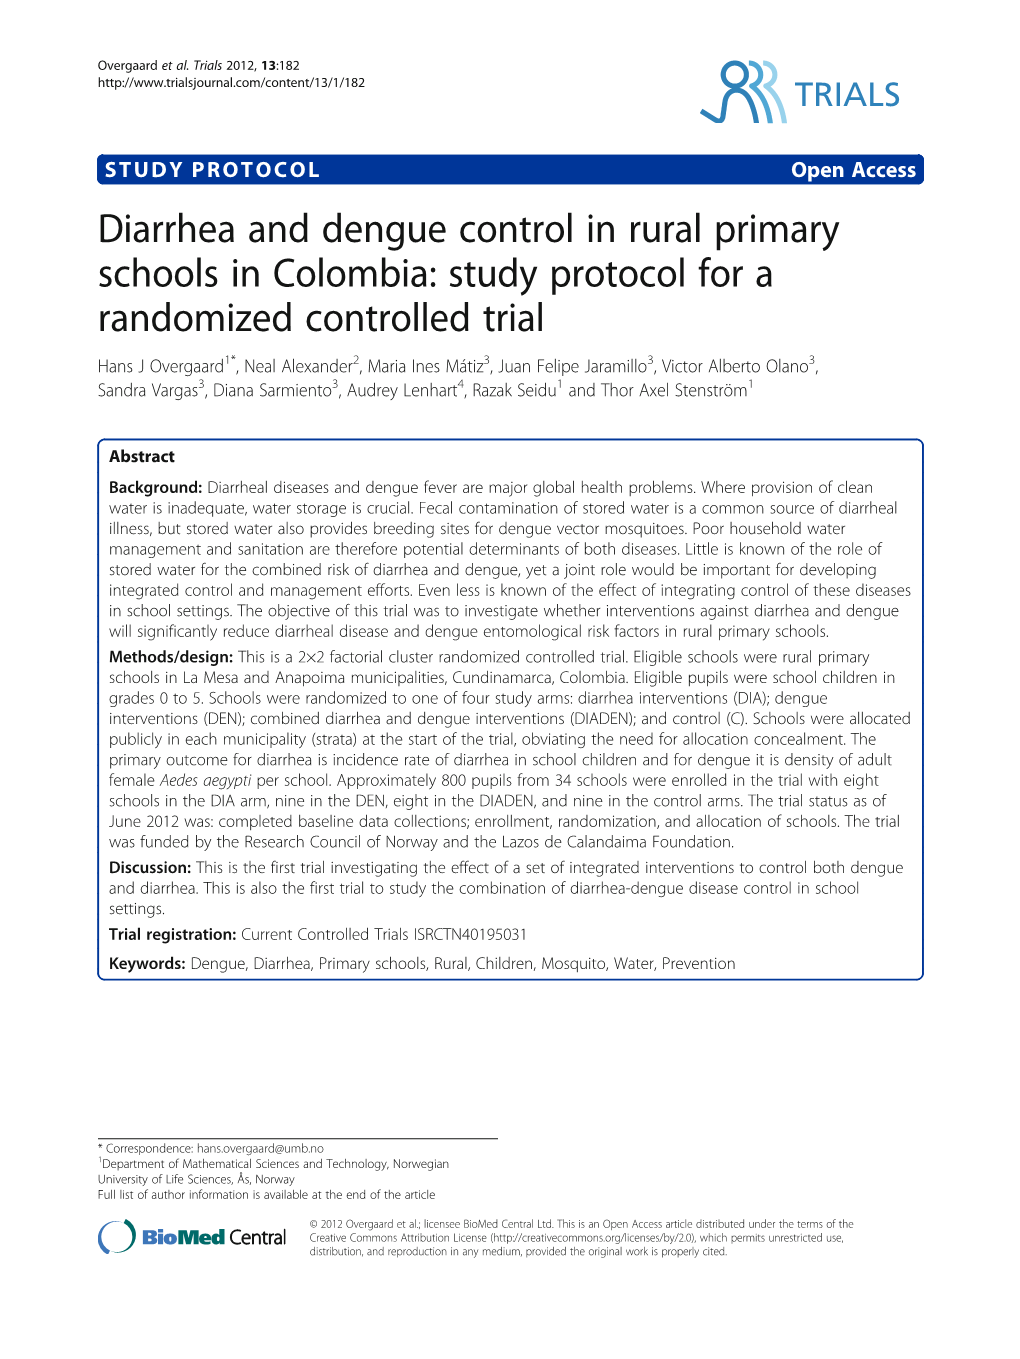 Diarrhea and Dengue Control in Rural Primary Schools In